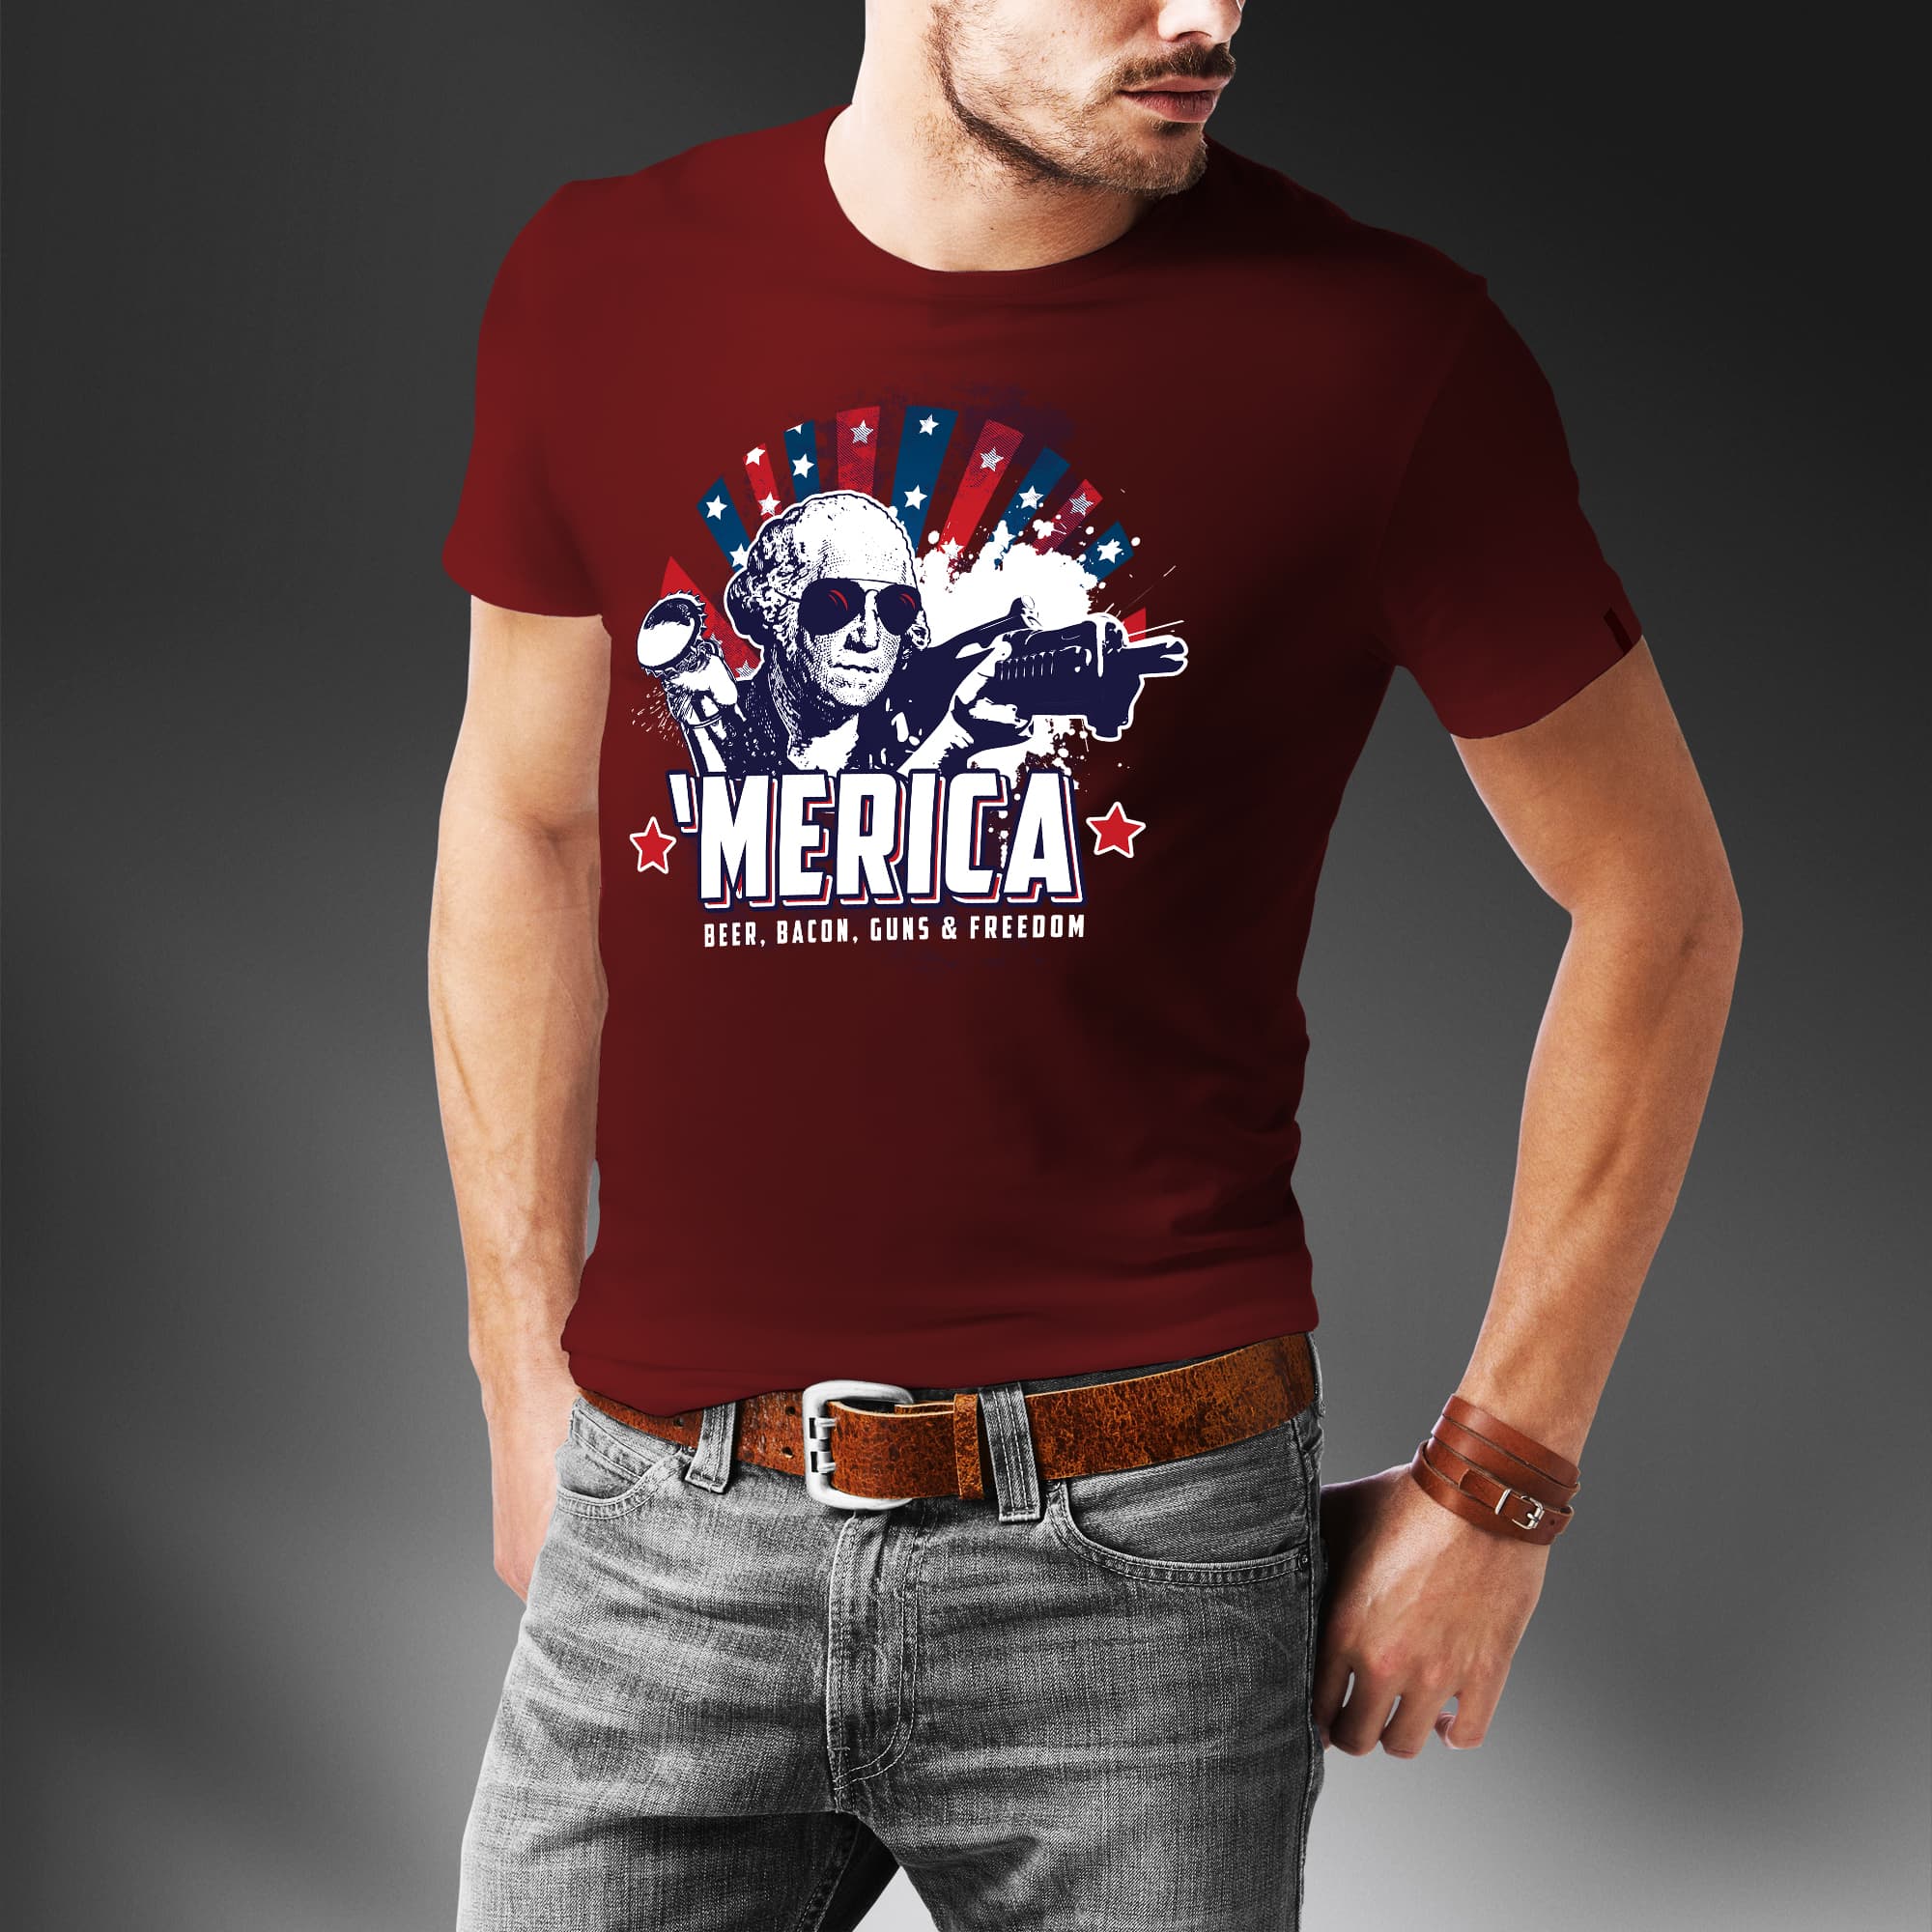 'Merica - Beer, Bacon, Guns and Freedom Tee Shirt